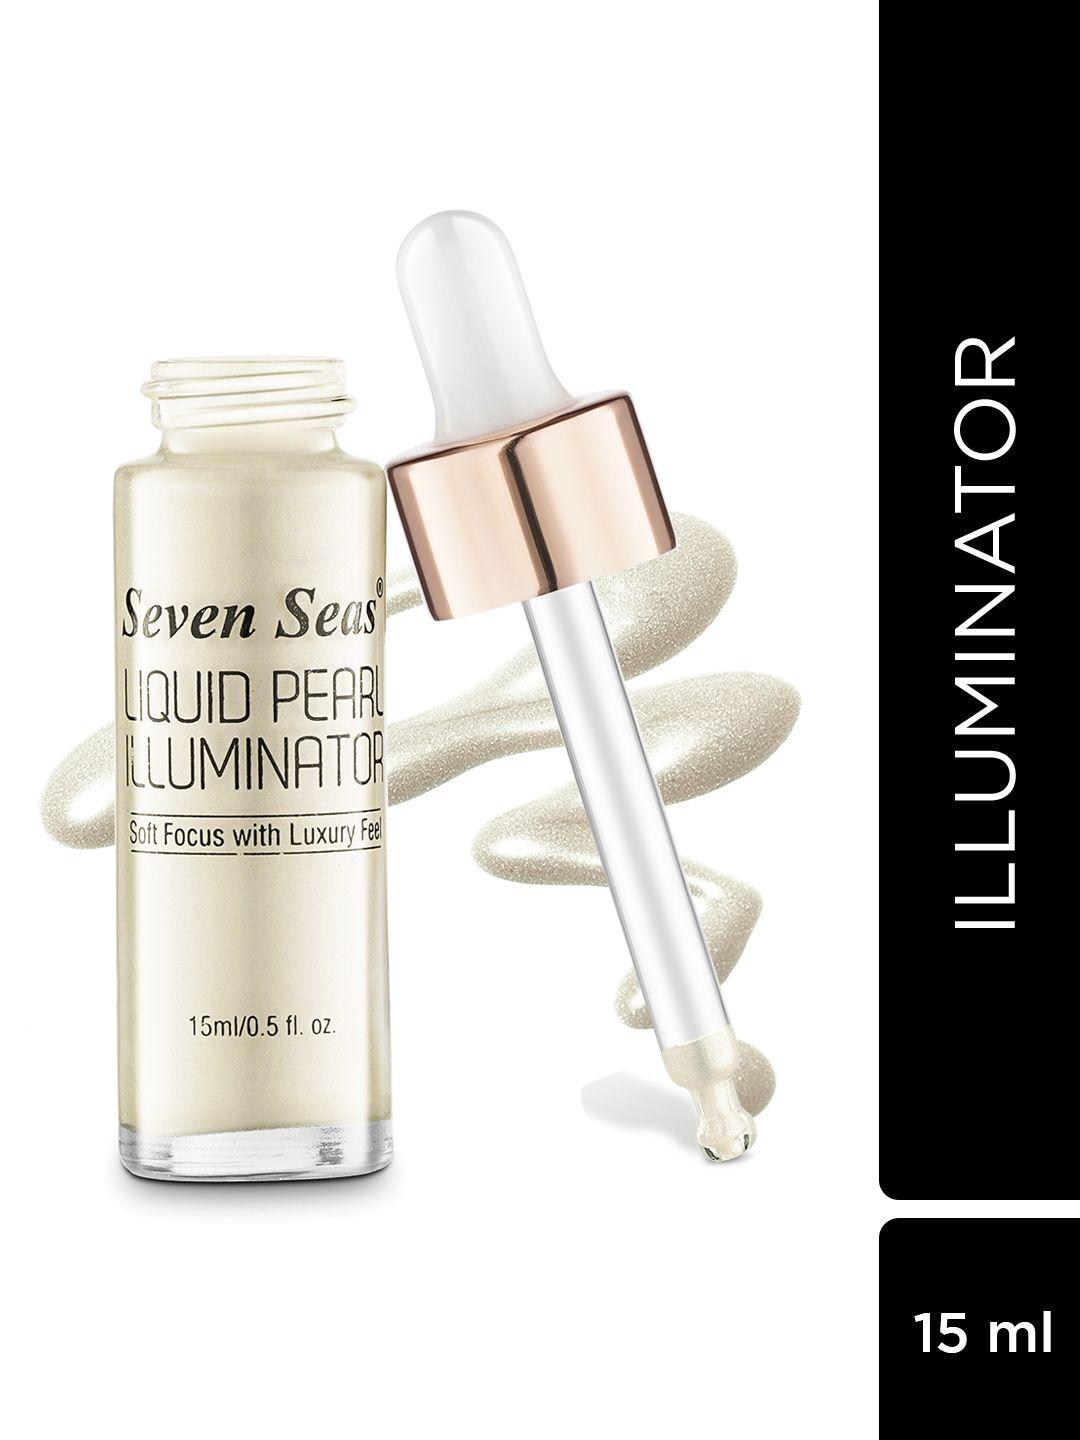 seven seas soft focus liquid pearl illuminator face highlighter 15ml - magic 104